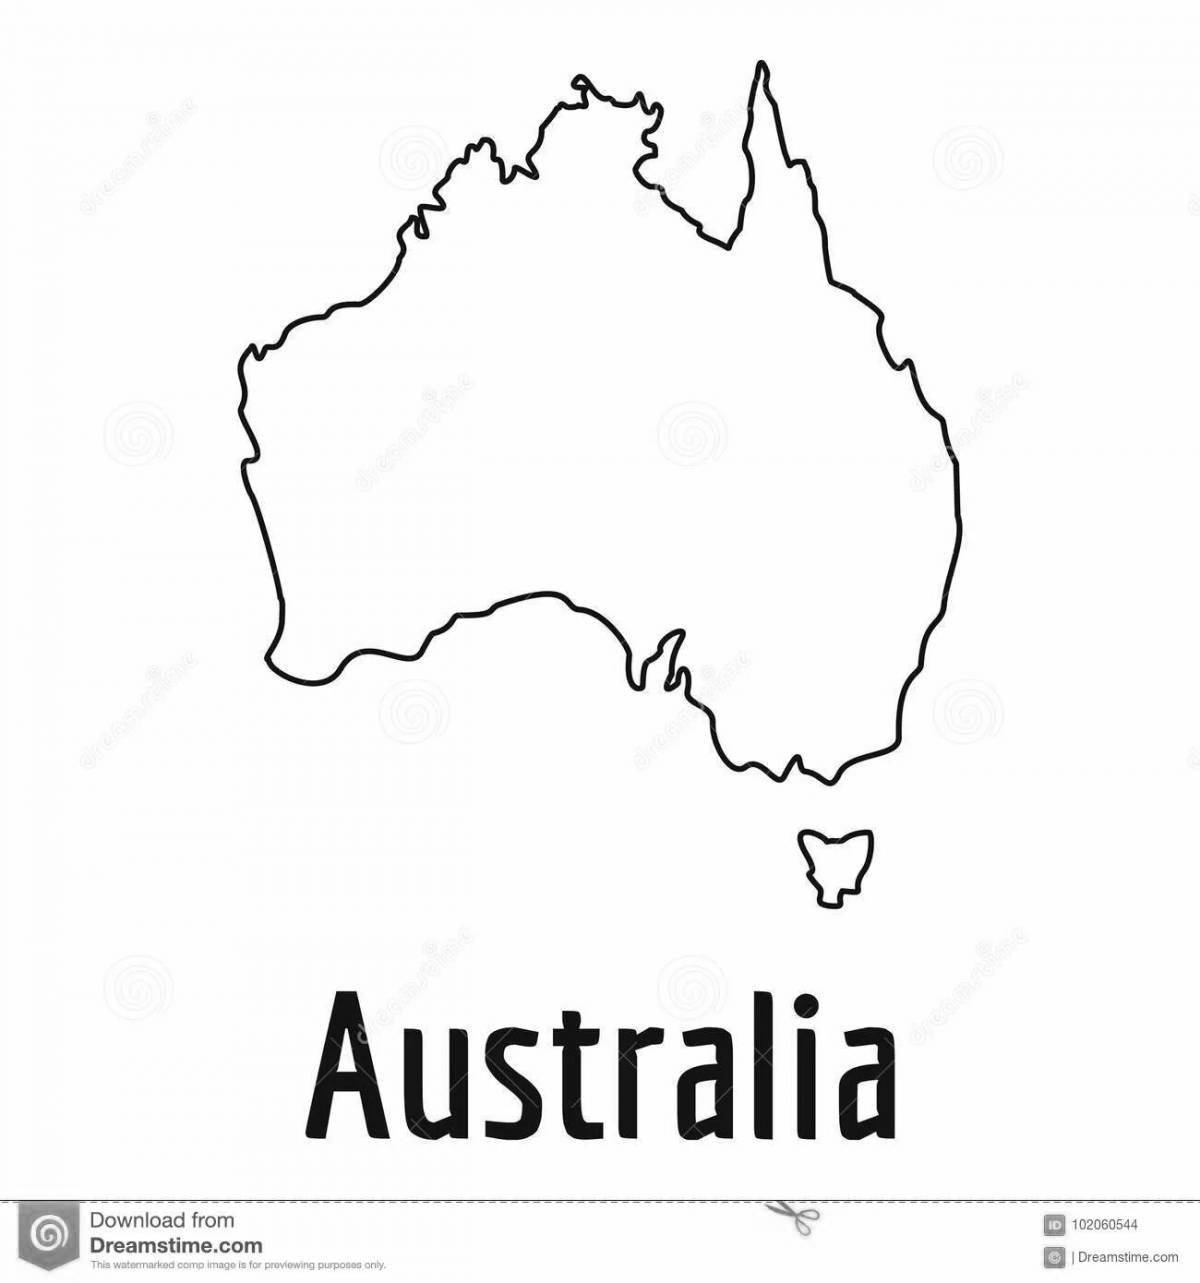 Coloring book innovative australia map